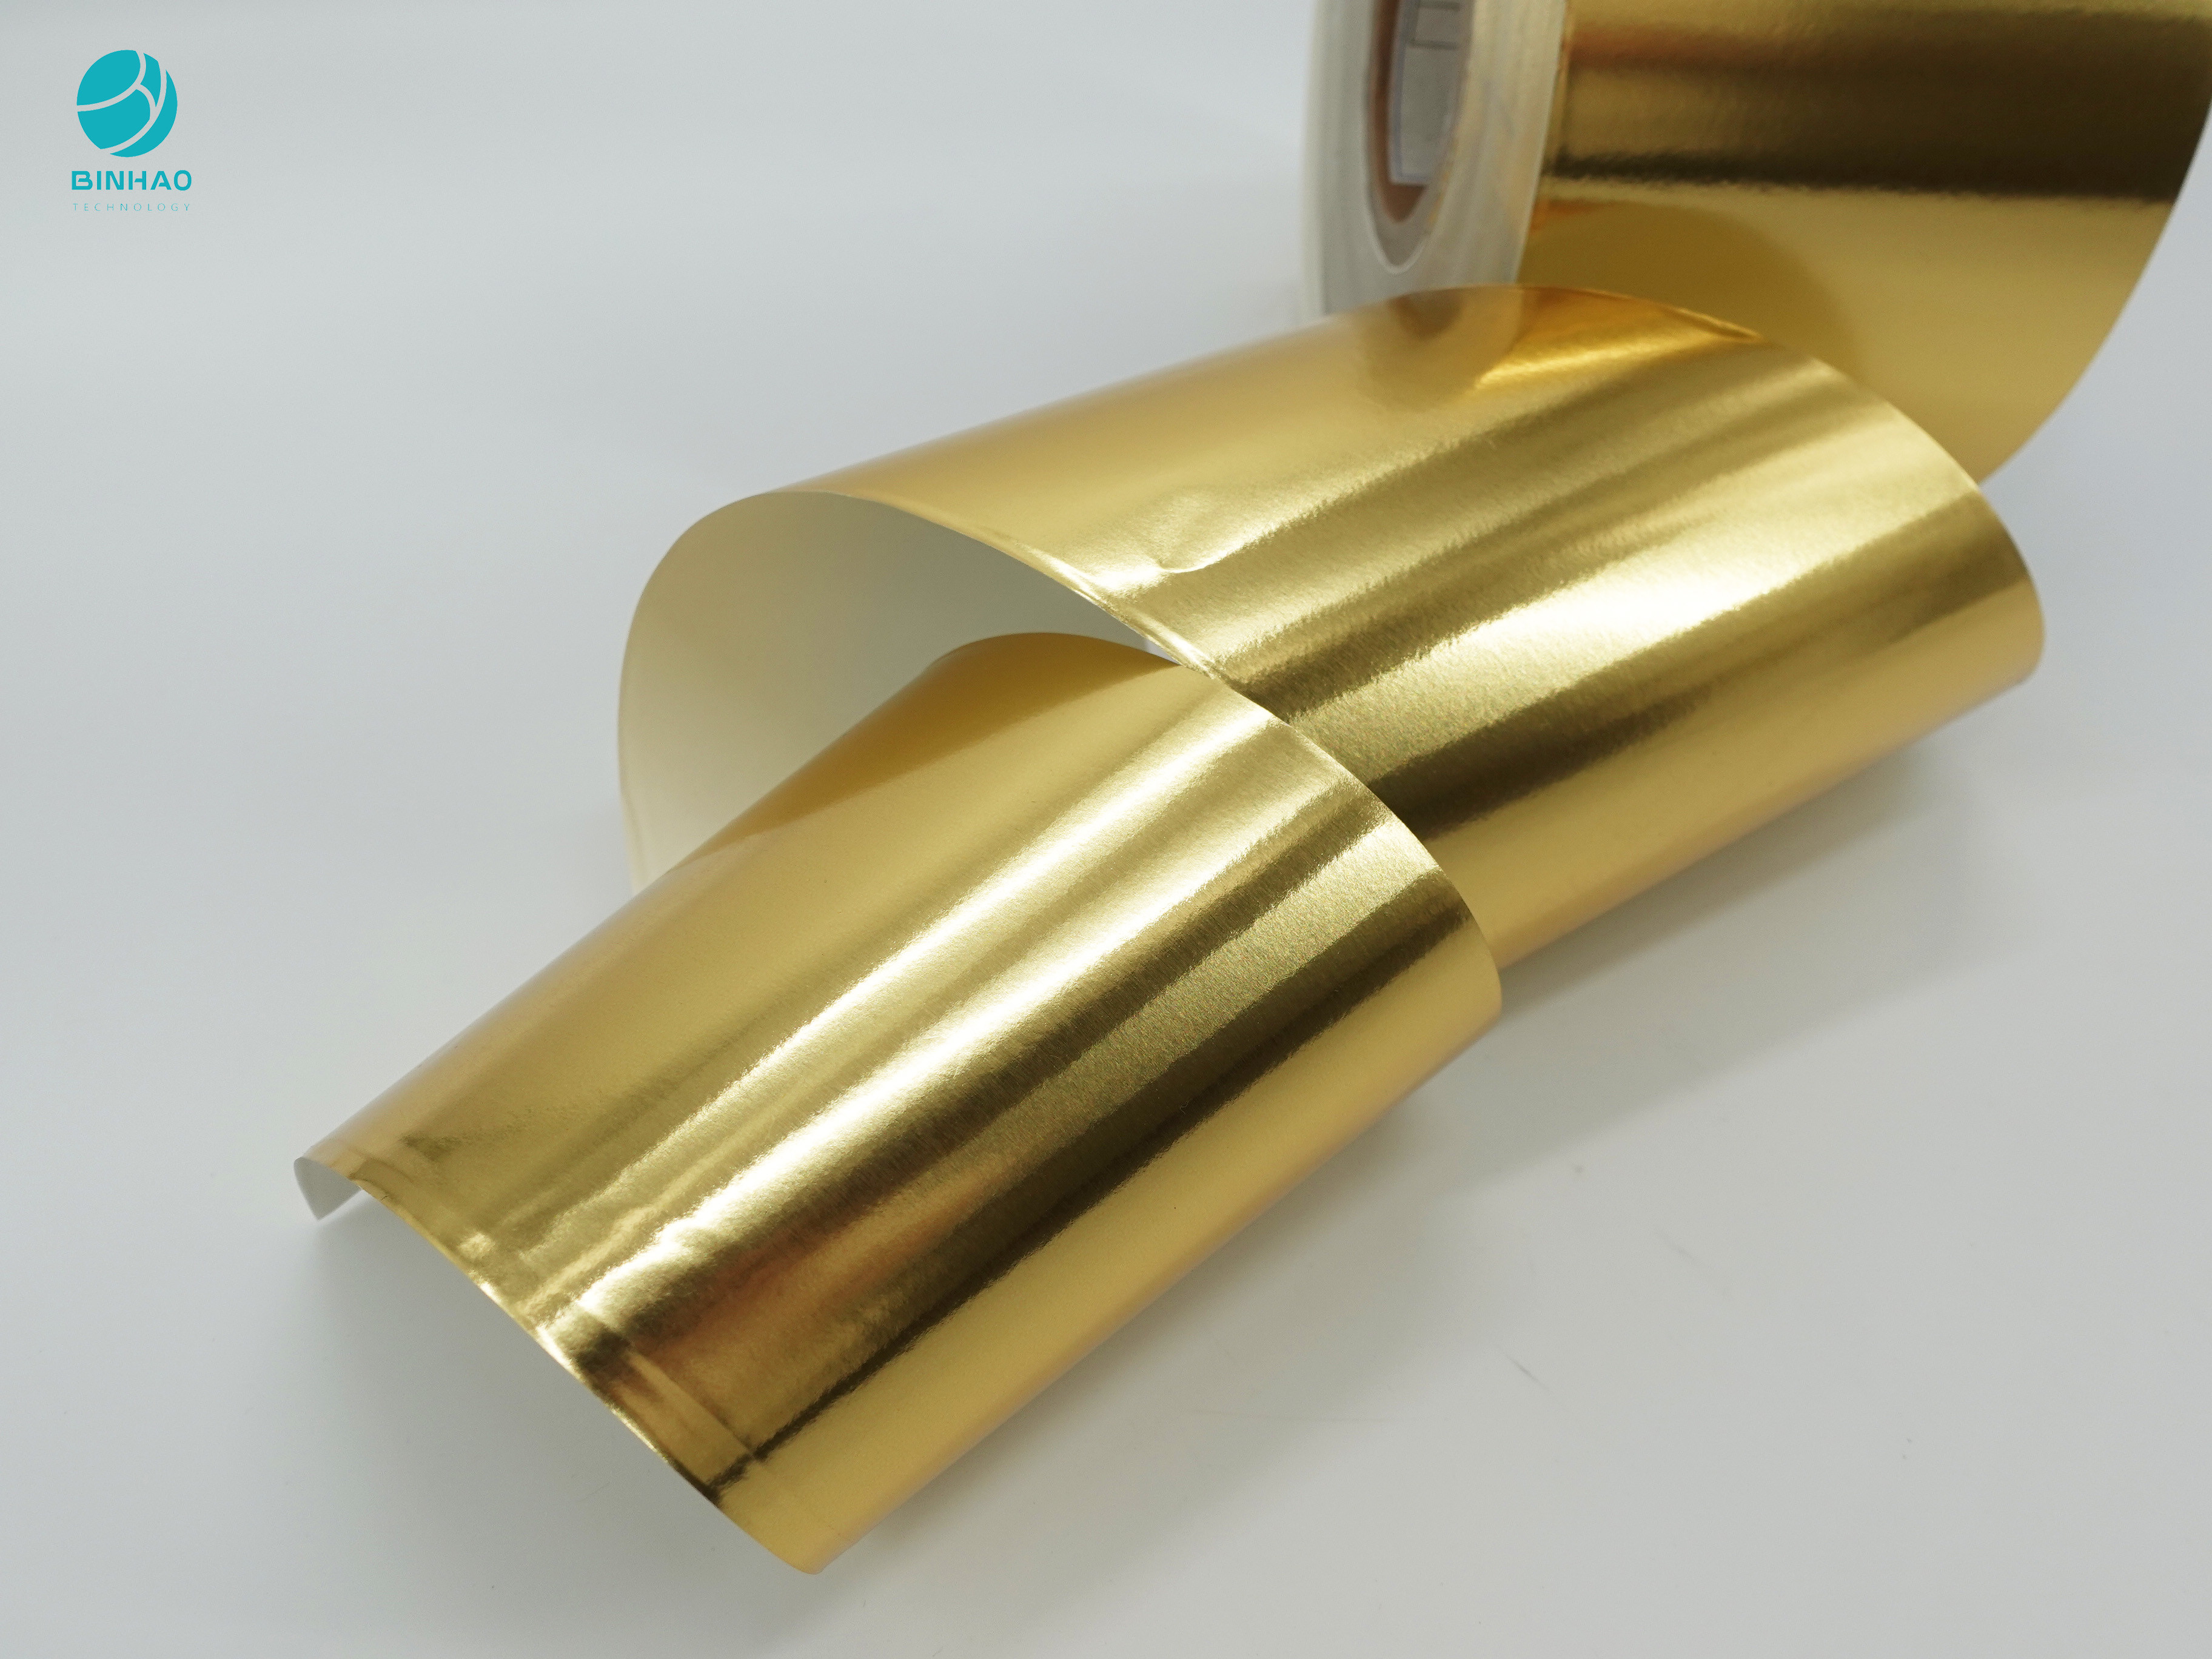 Sigara İç Ambalaj İçin Altın Pürüzsüz Kompozit 114mm Alüminyum Folyo Kağıt